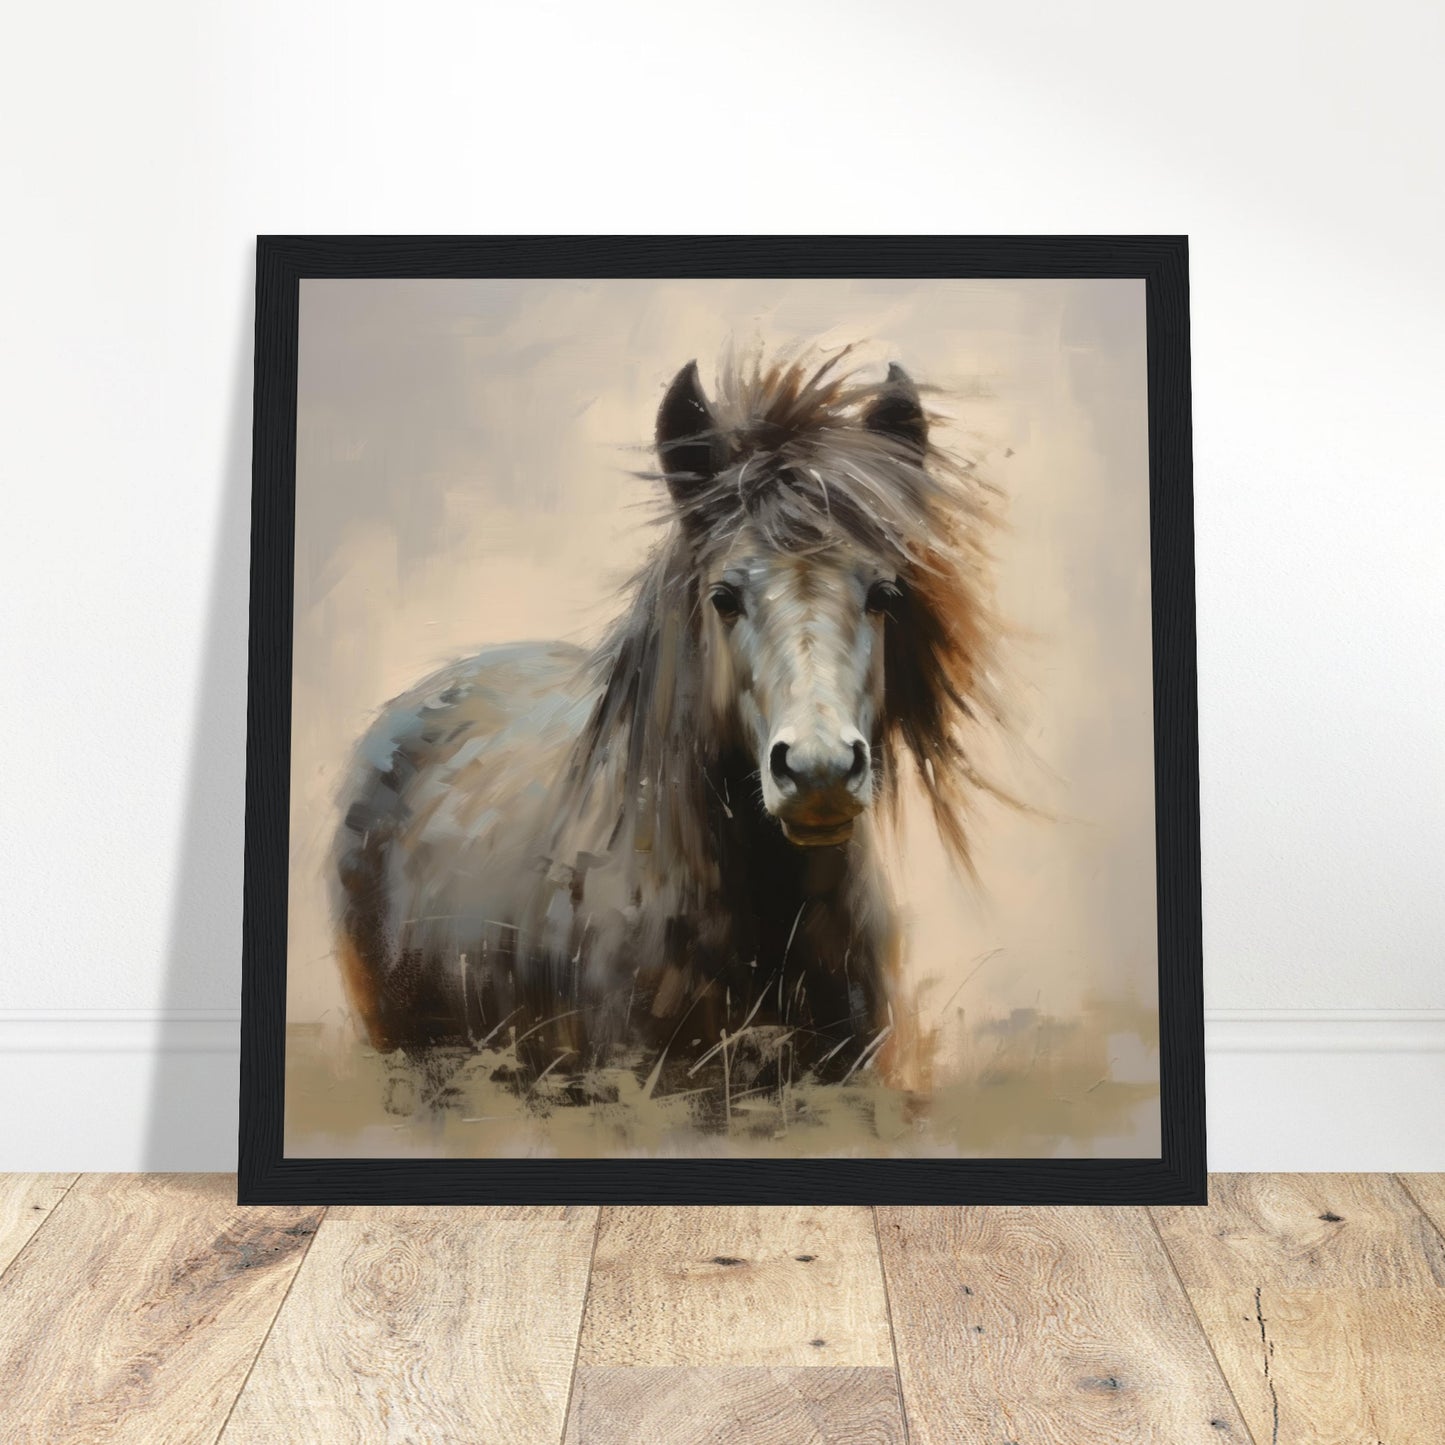 Horse Elegance #03 - Print Room Ltd Black frame 30x30 cm / 12x12"